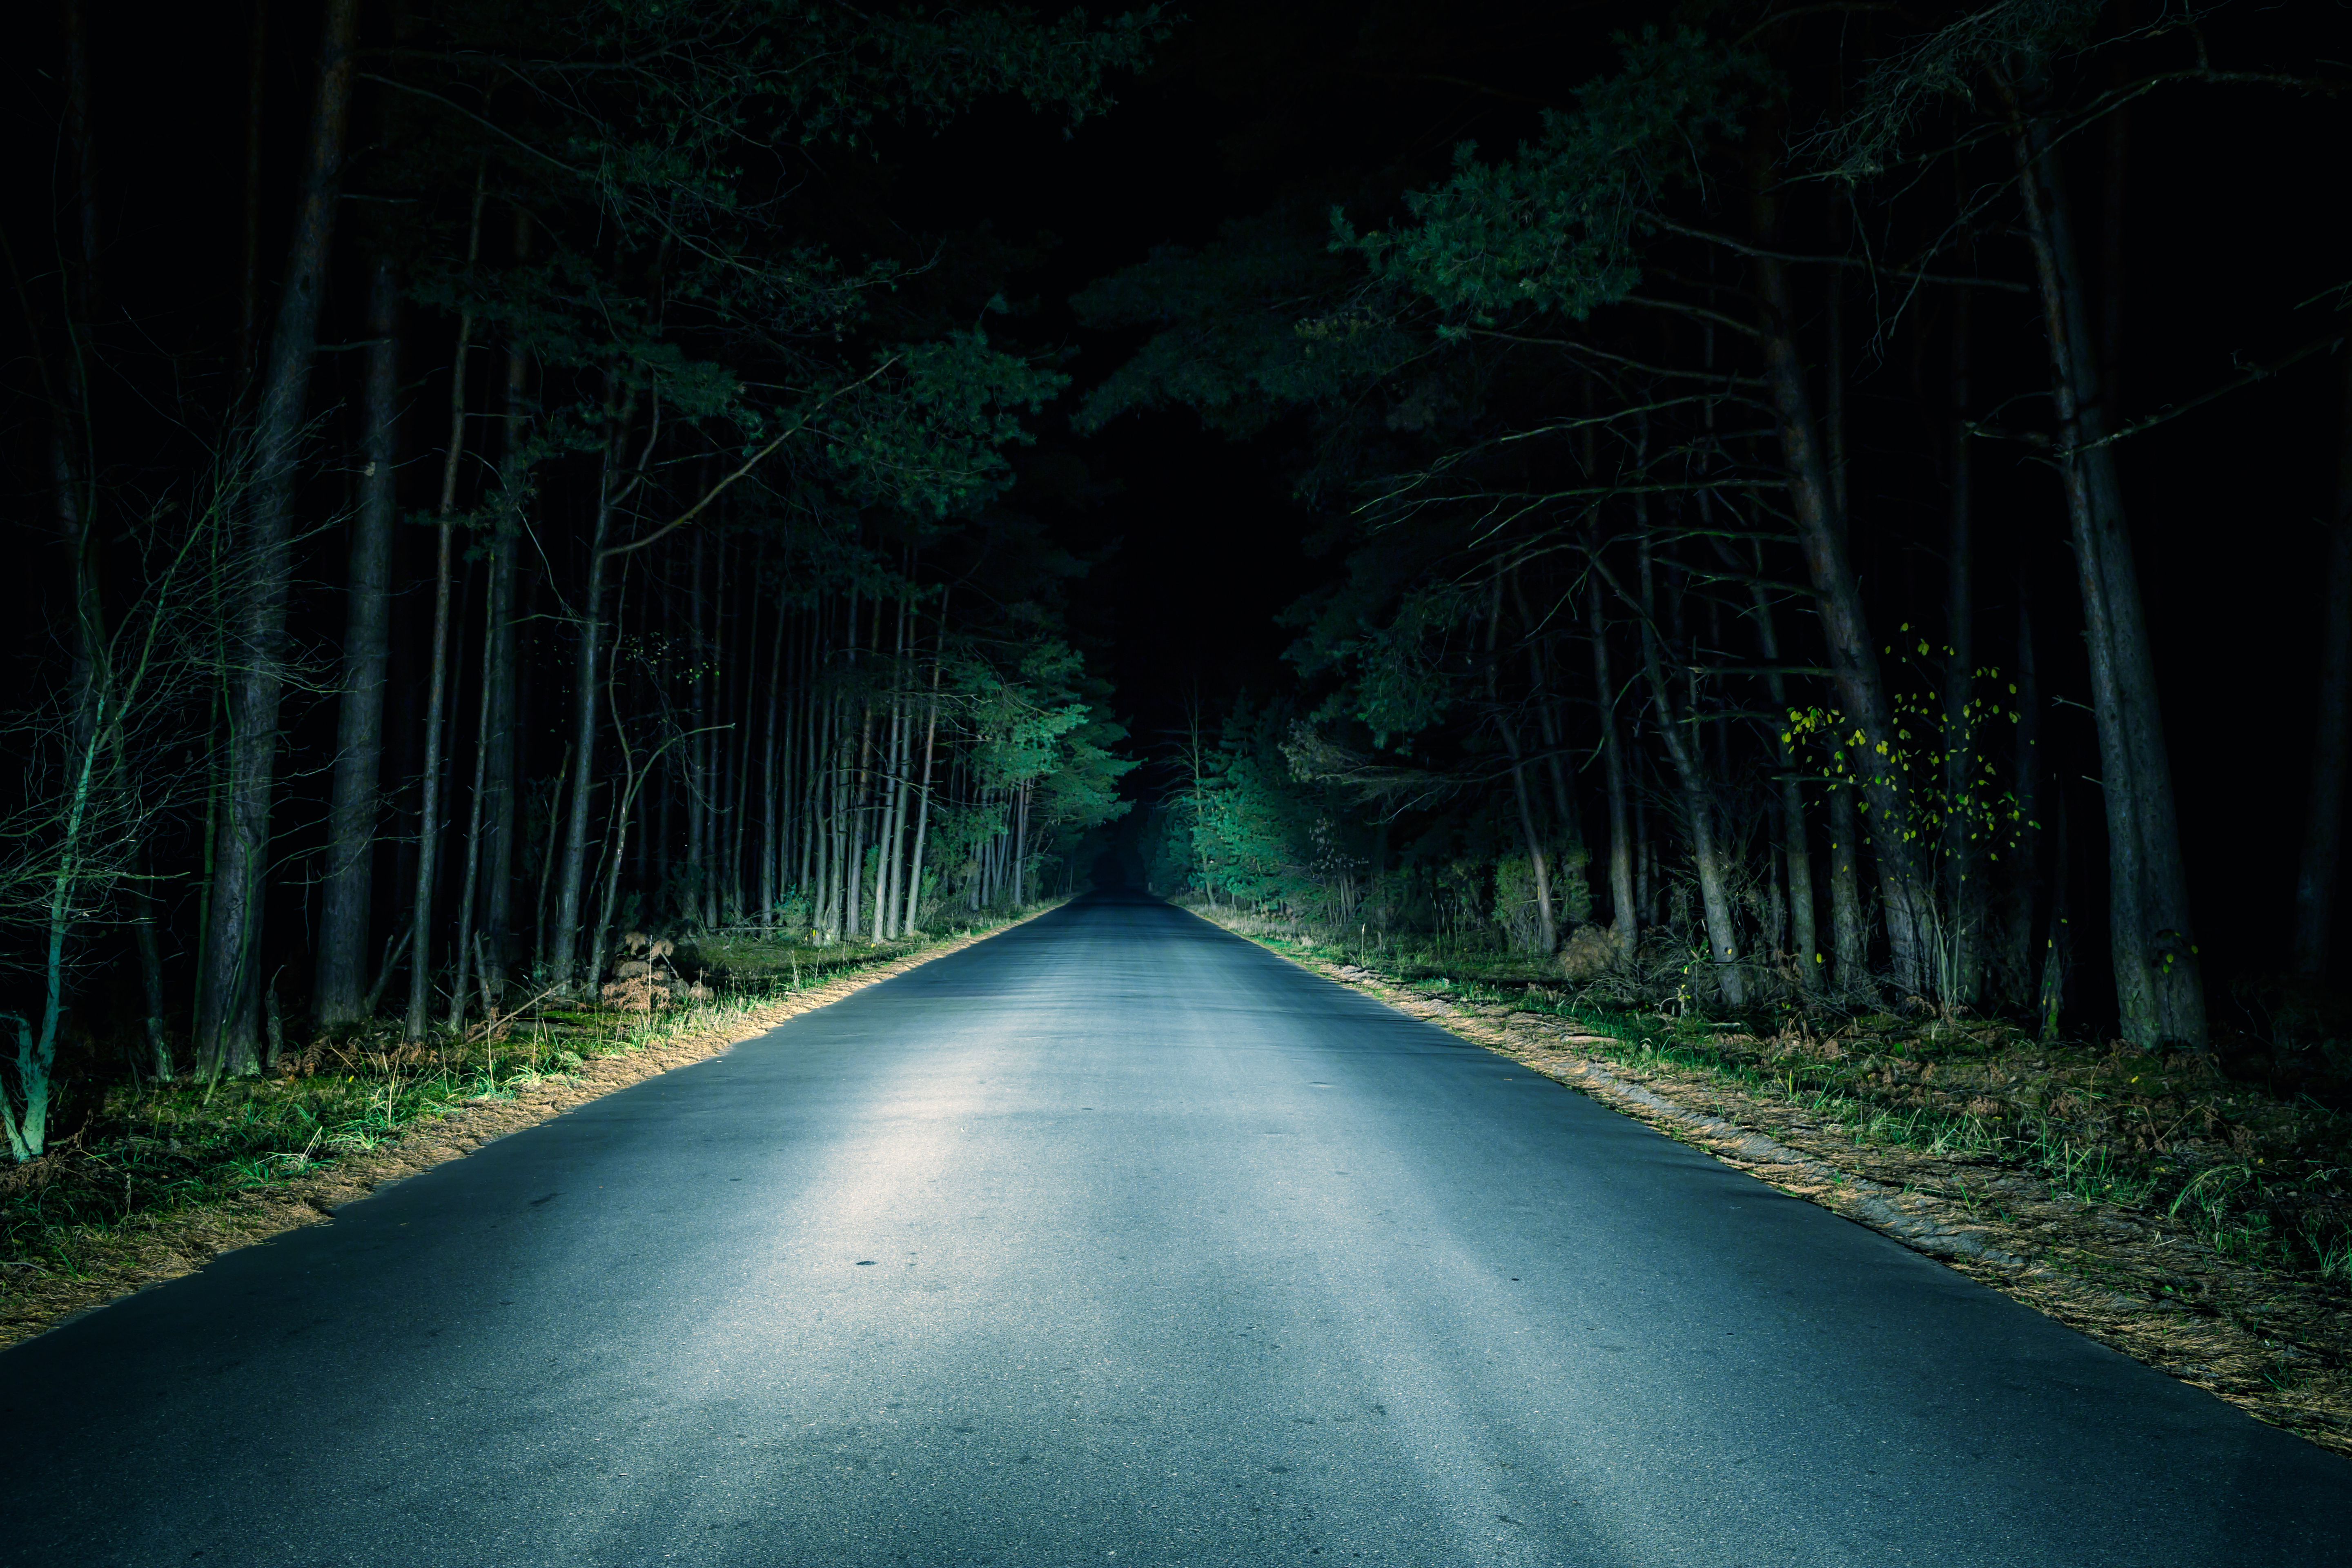 Carretera nocturna en un bosque oscuro | Fuente: Shutterstock